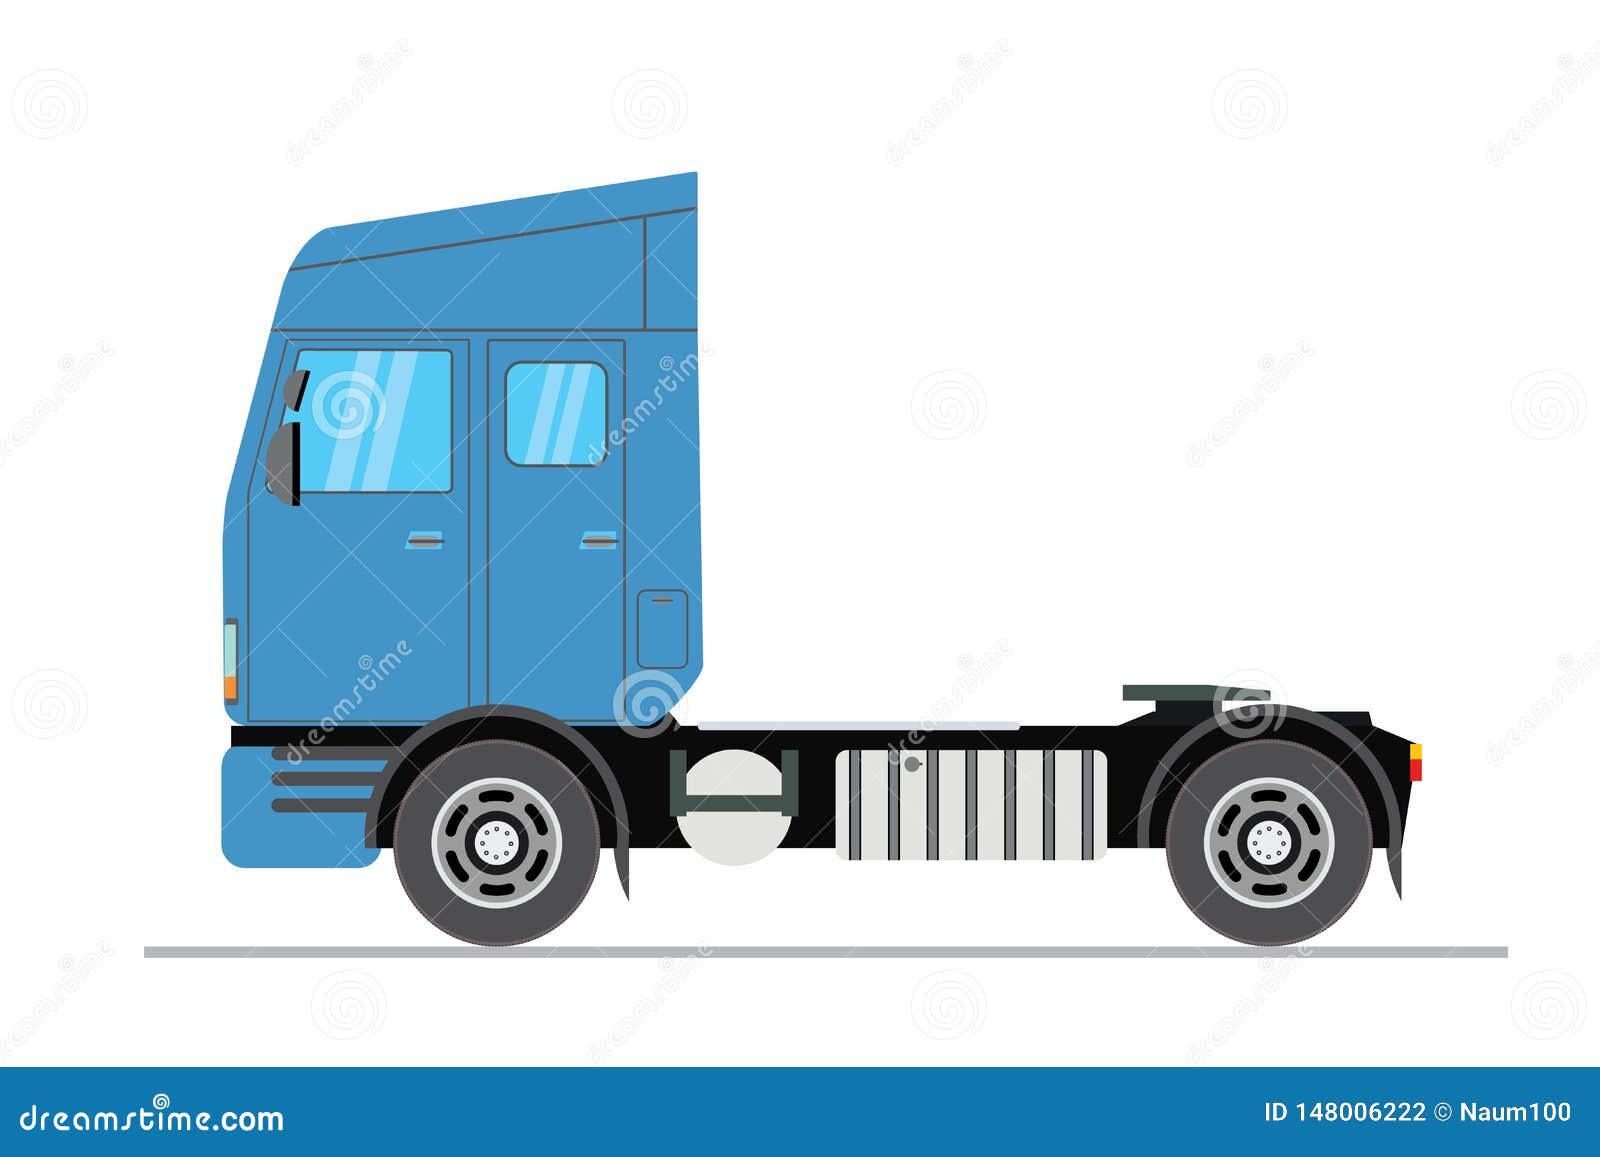 Blue semi truck stock vector. Illustration of lorry